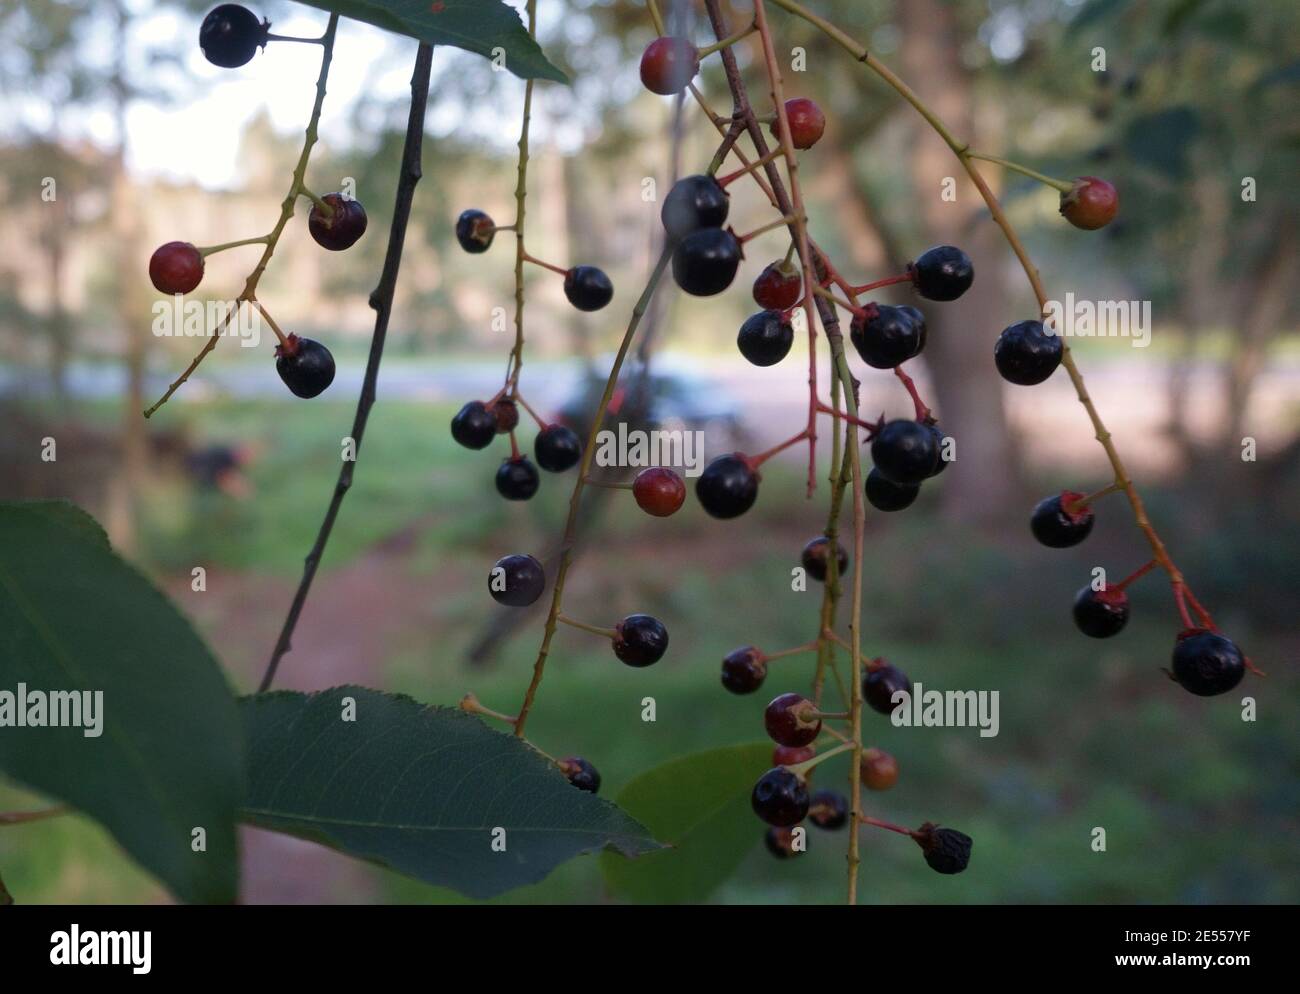 Black berries of the wild cherry with a nice blurred background.  Prunus avium, sweet cherry, gean or bird cherry Stock Photo